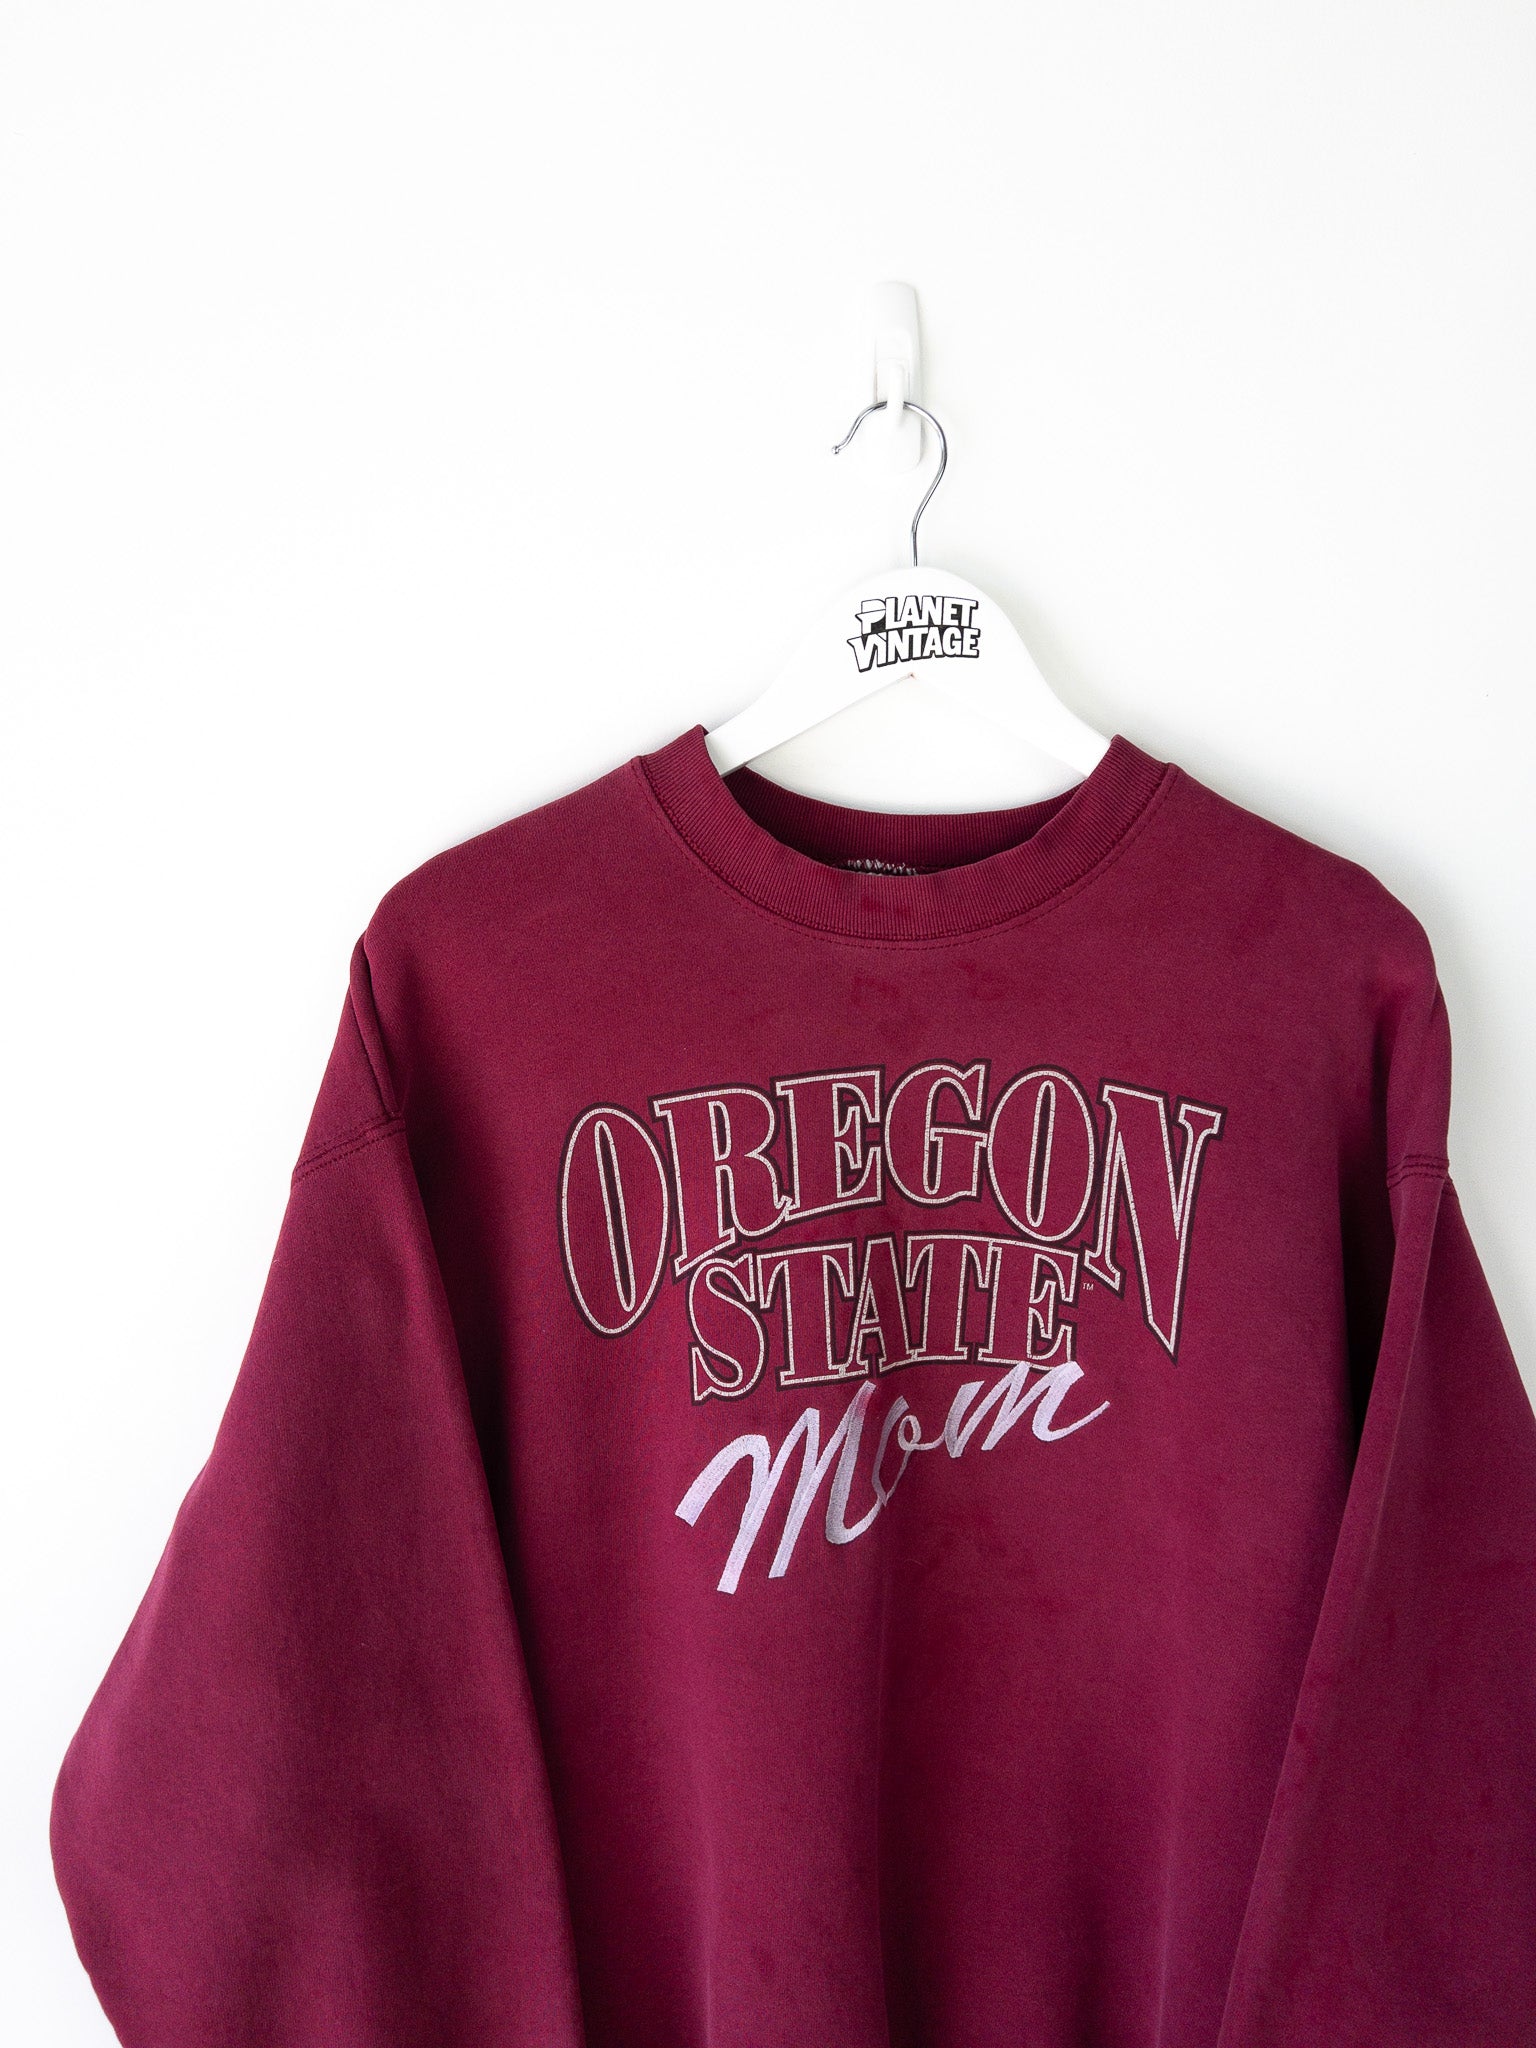 Vintage Oregon State 'Mom' Sweatshirt (XL)